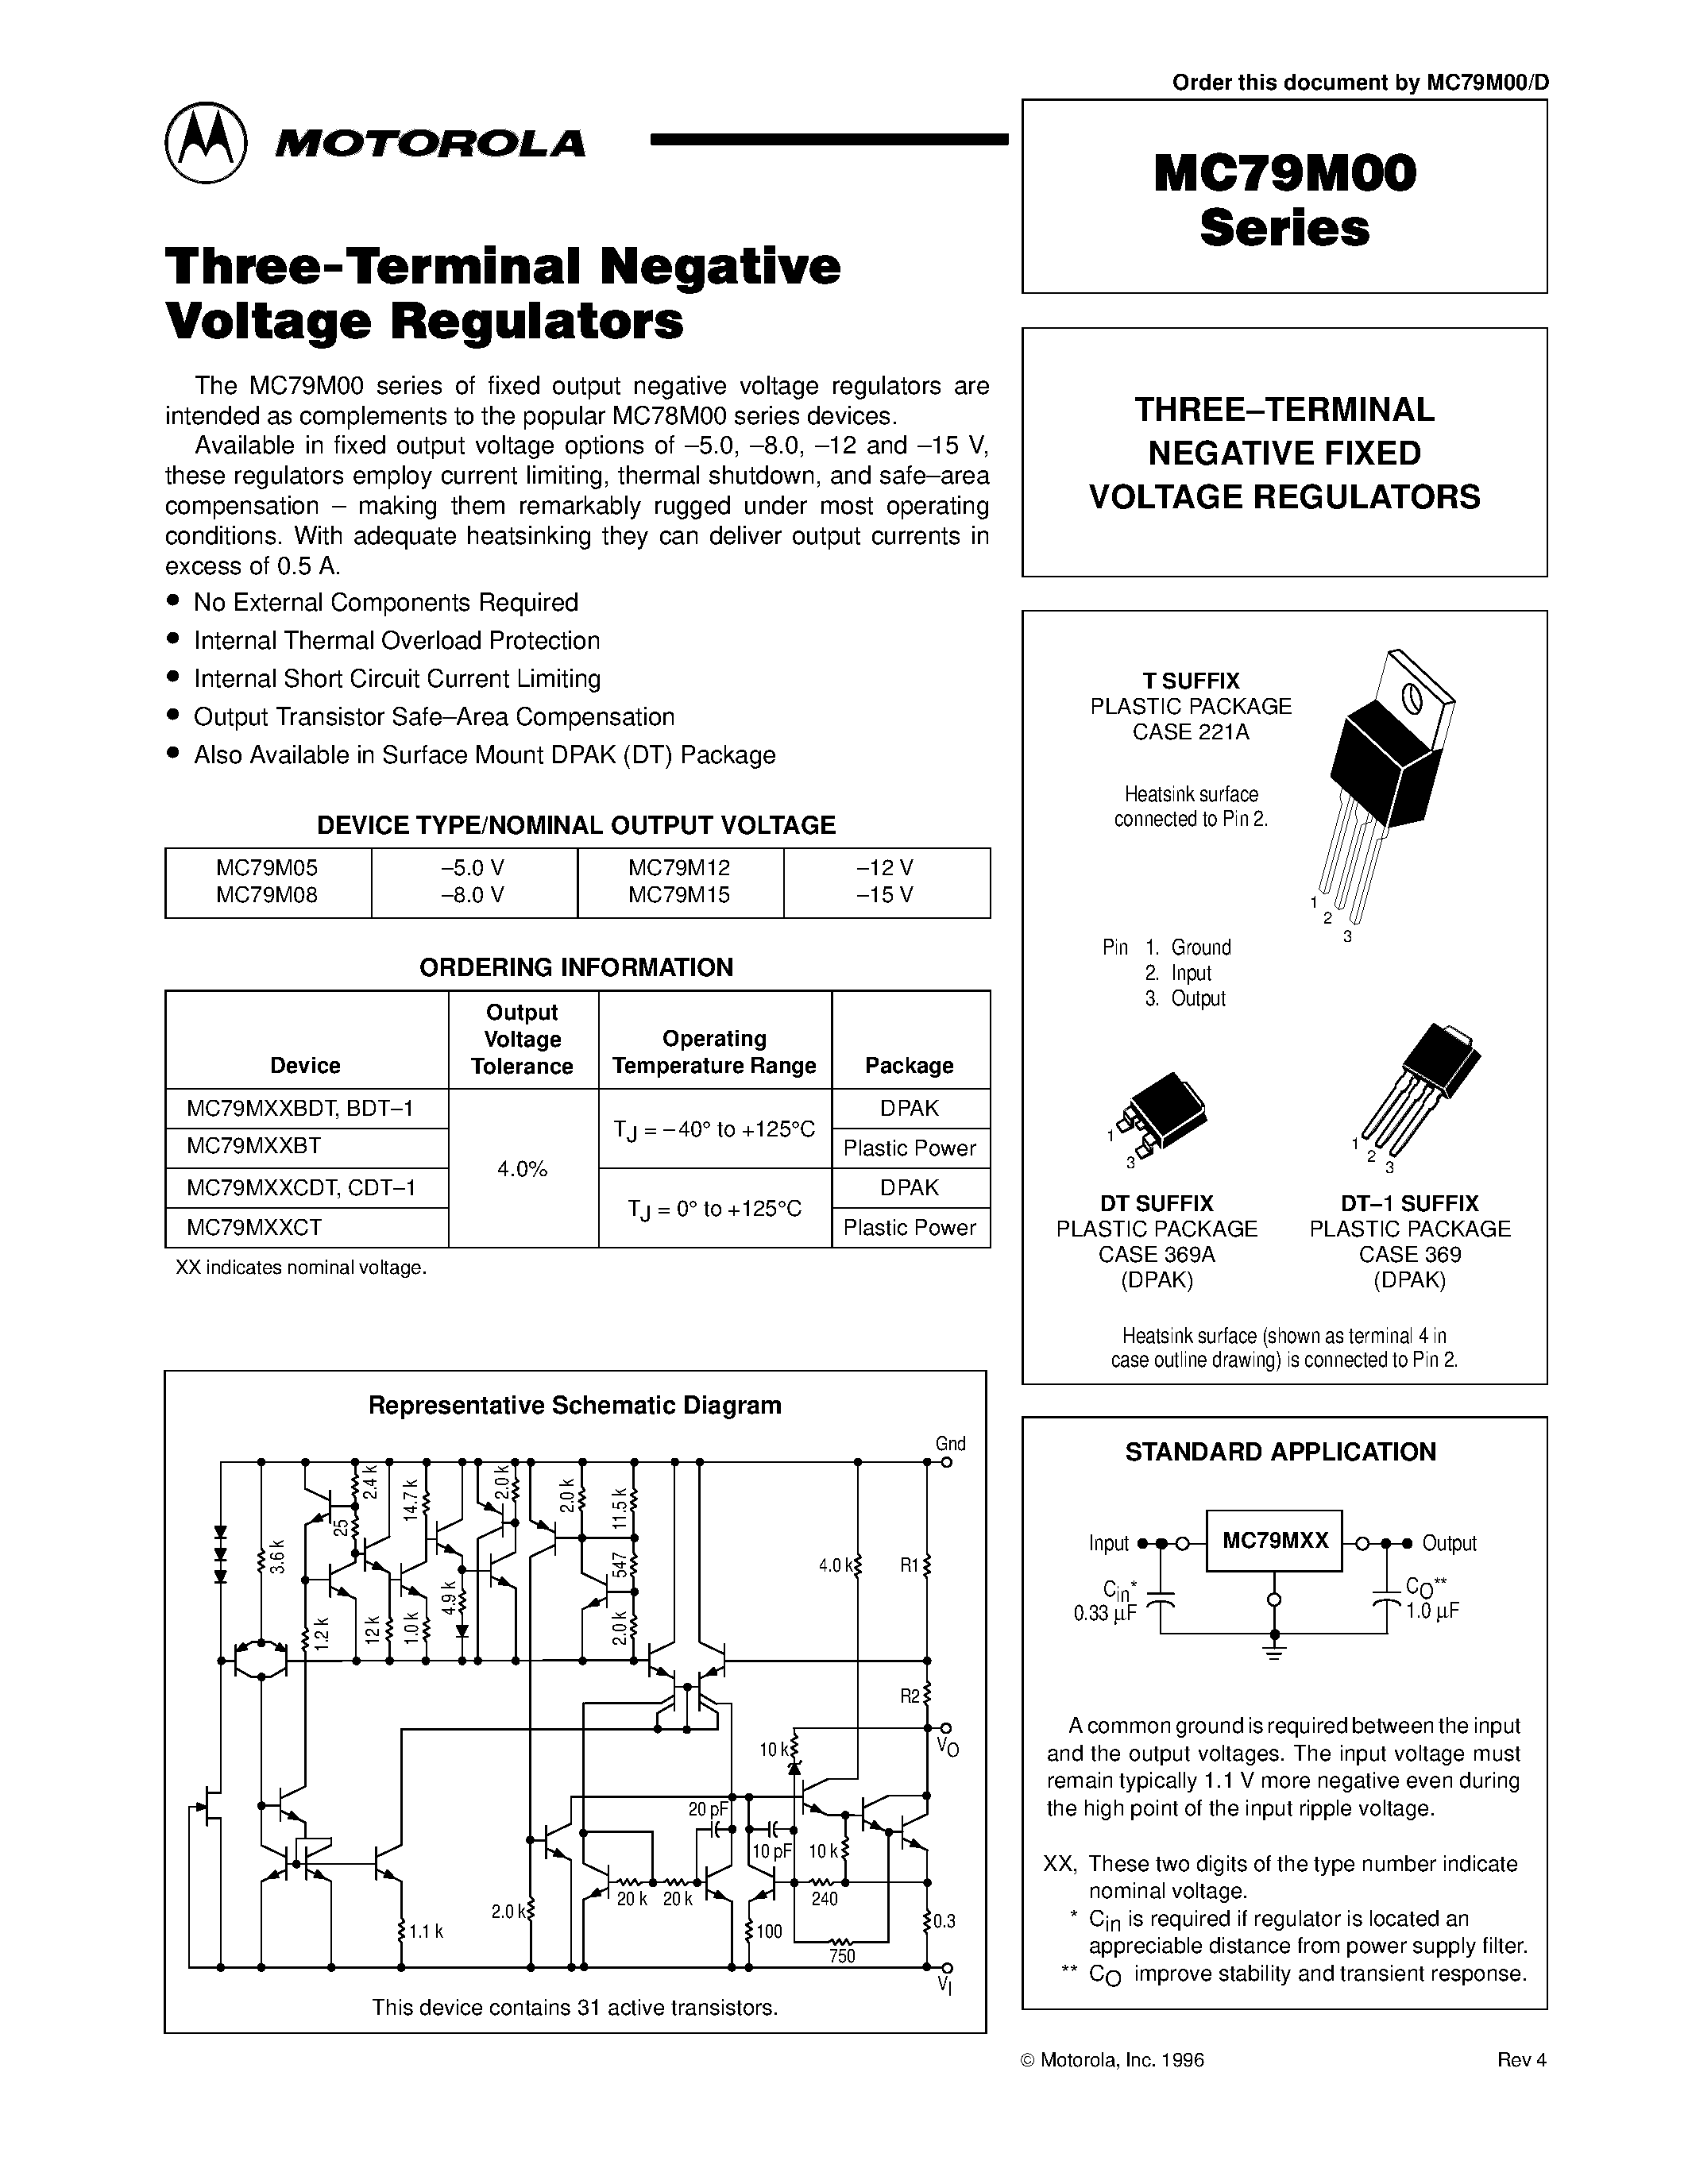 Datasheet MC79M15BT - THREE-TERMINAL NEGATIVE FIXED VOLTAGE REGULATORS page 1